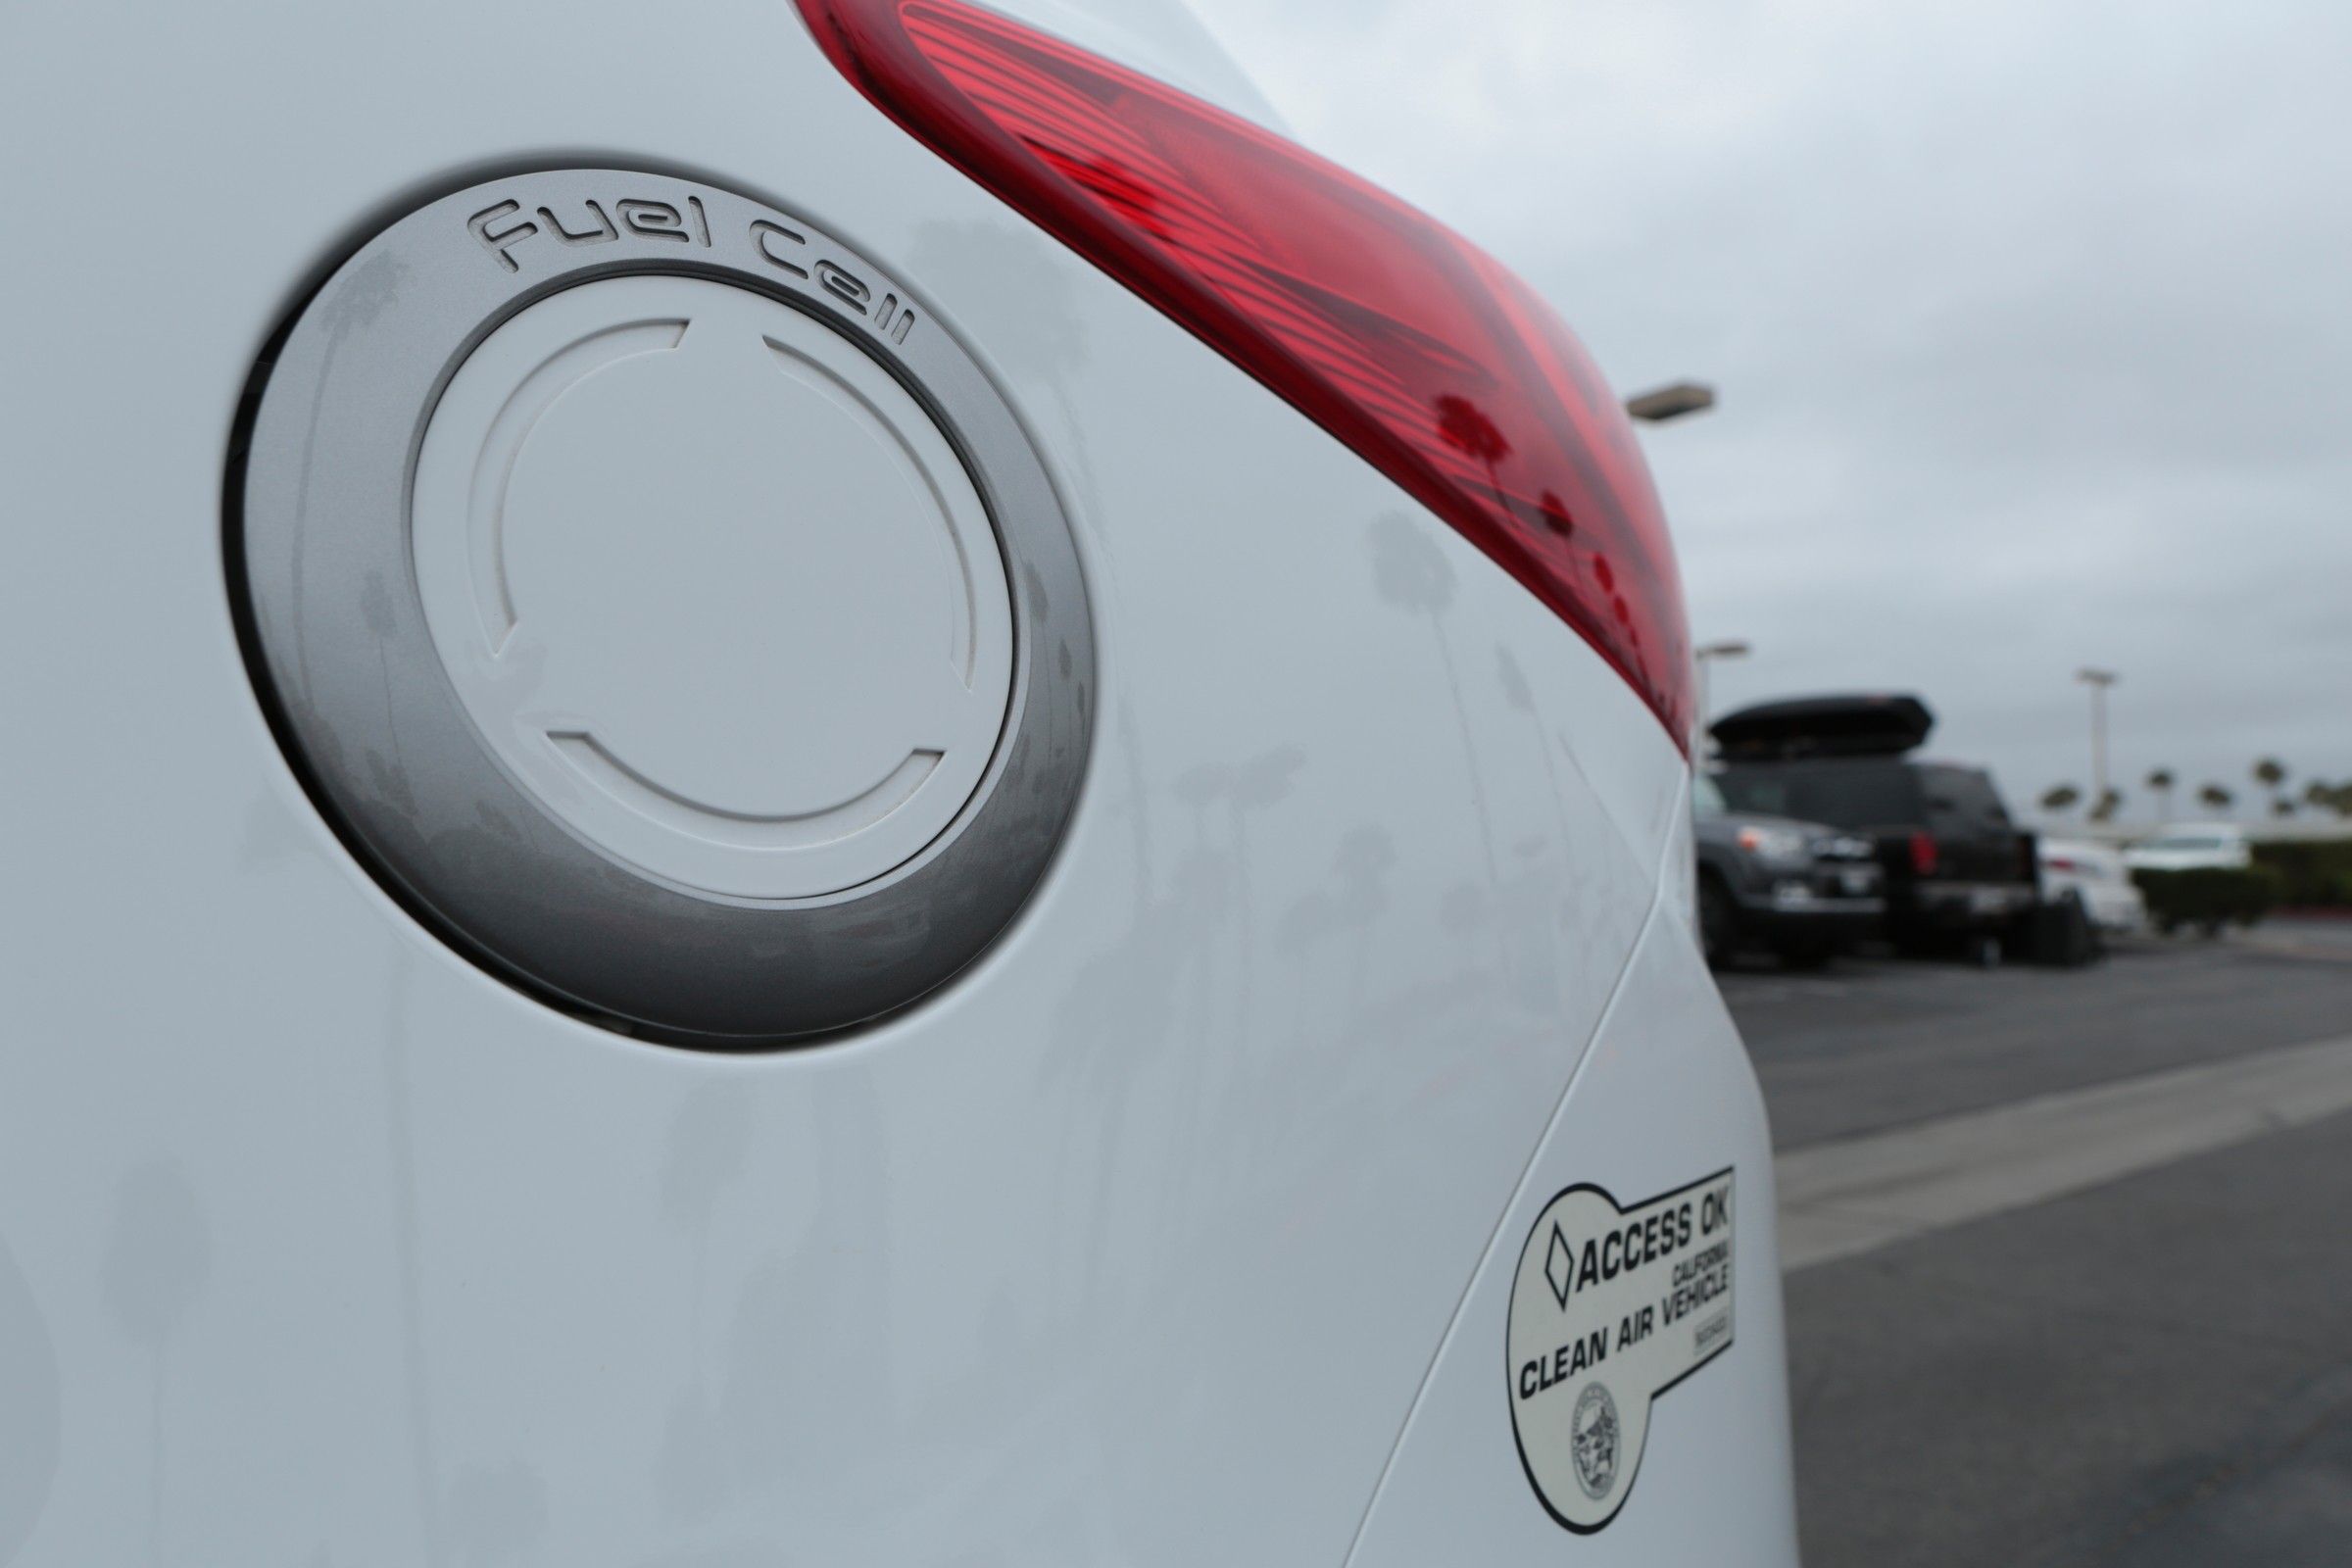 2015 Hyundai Tucson Fuel Cell 